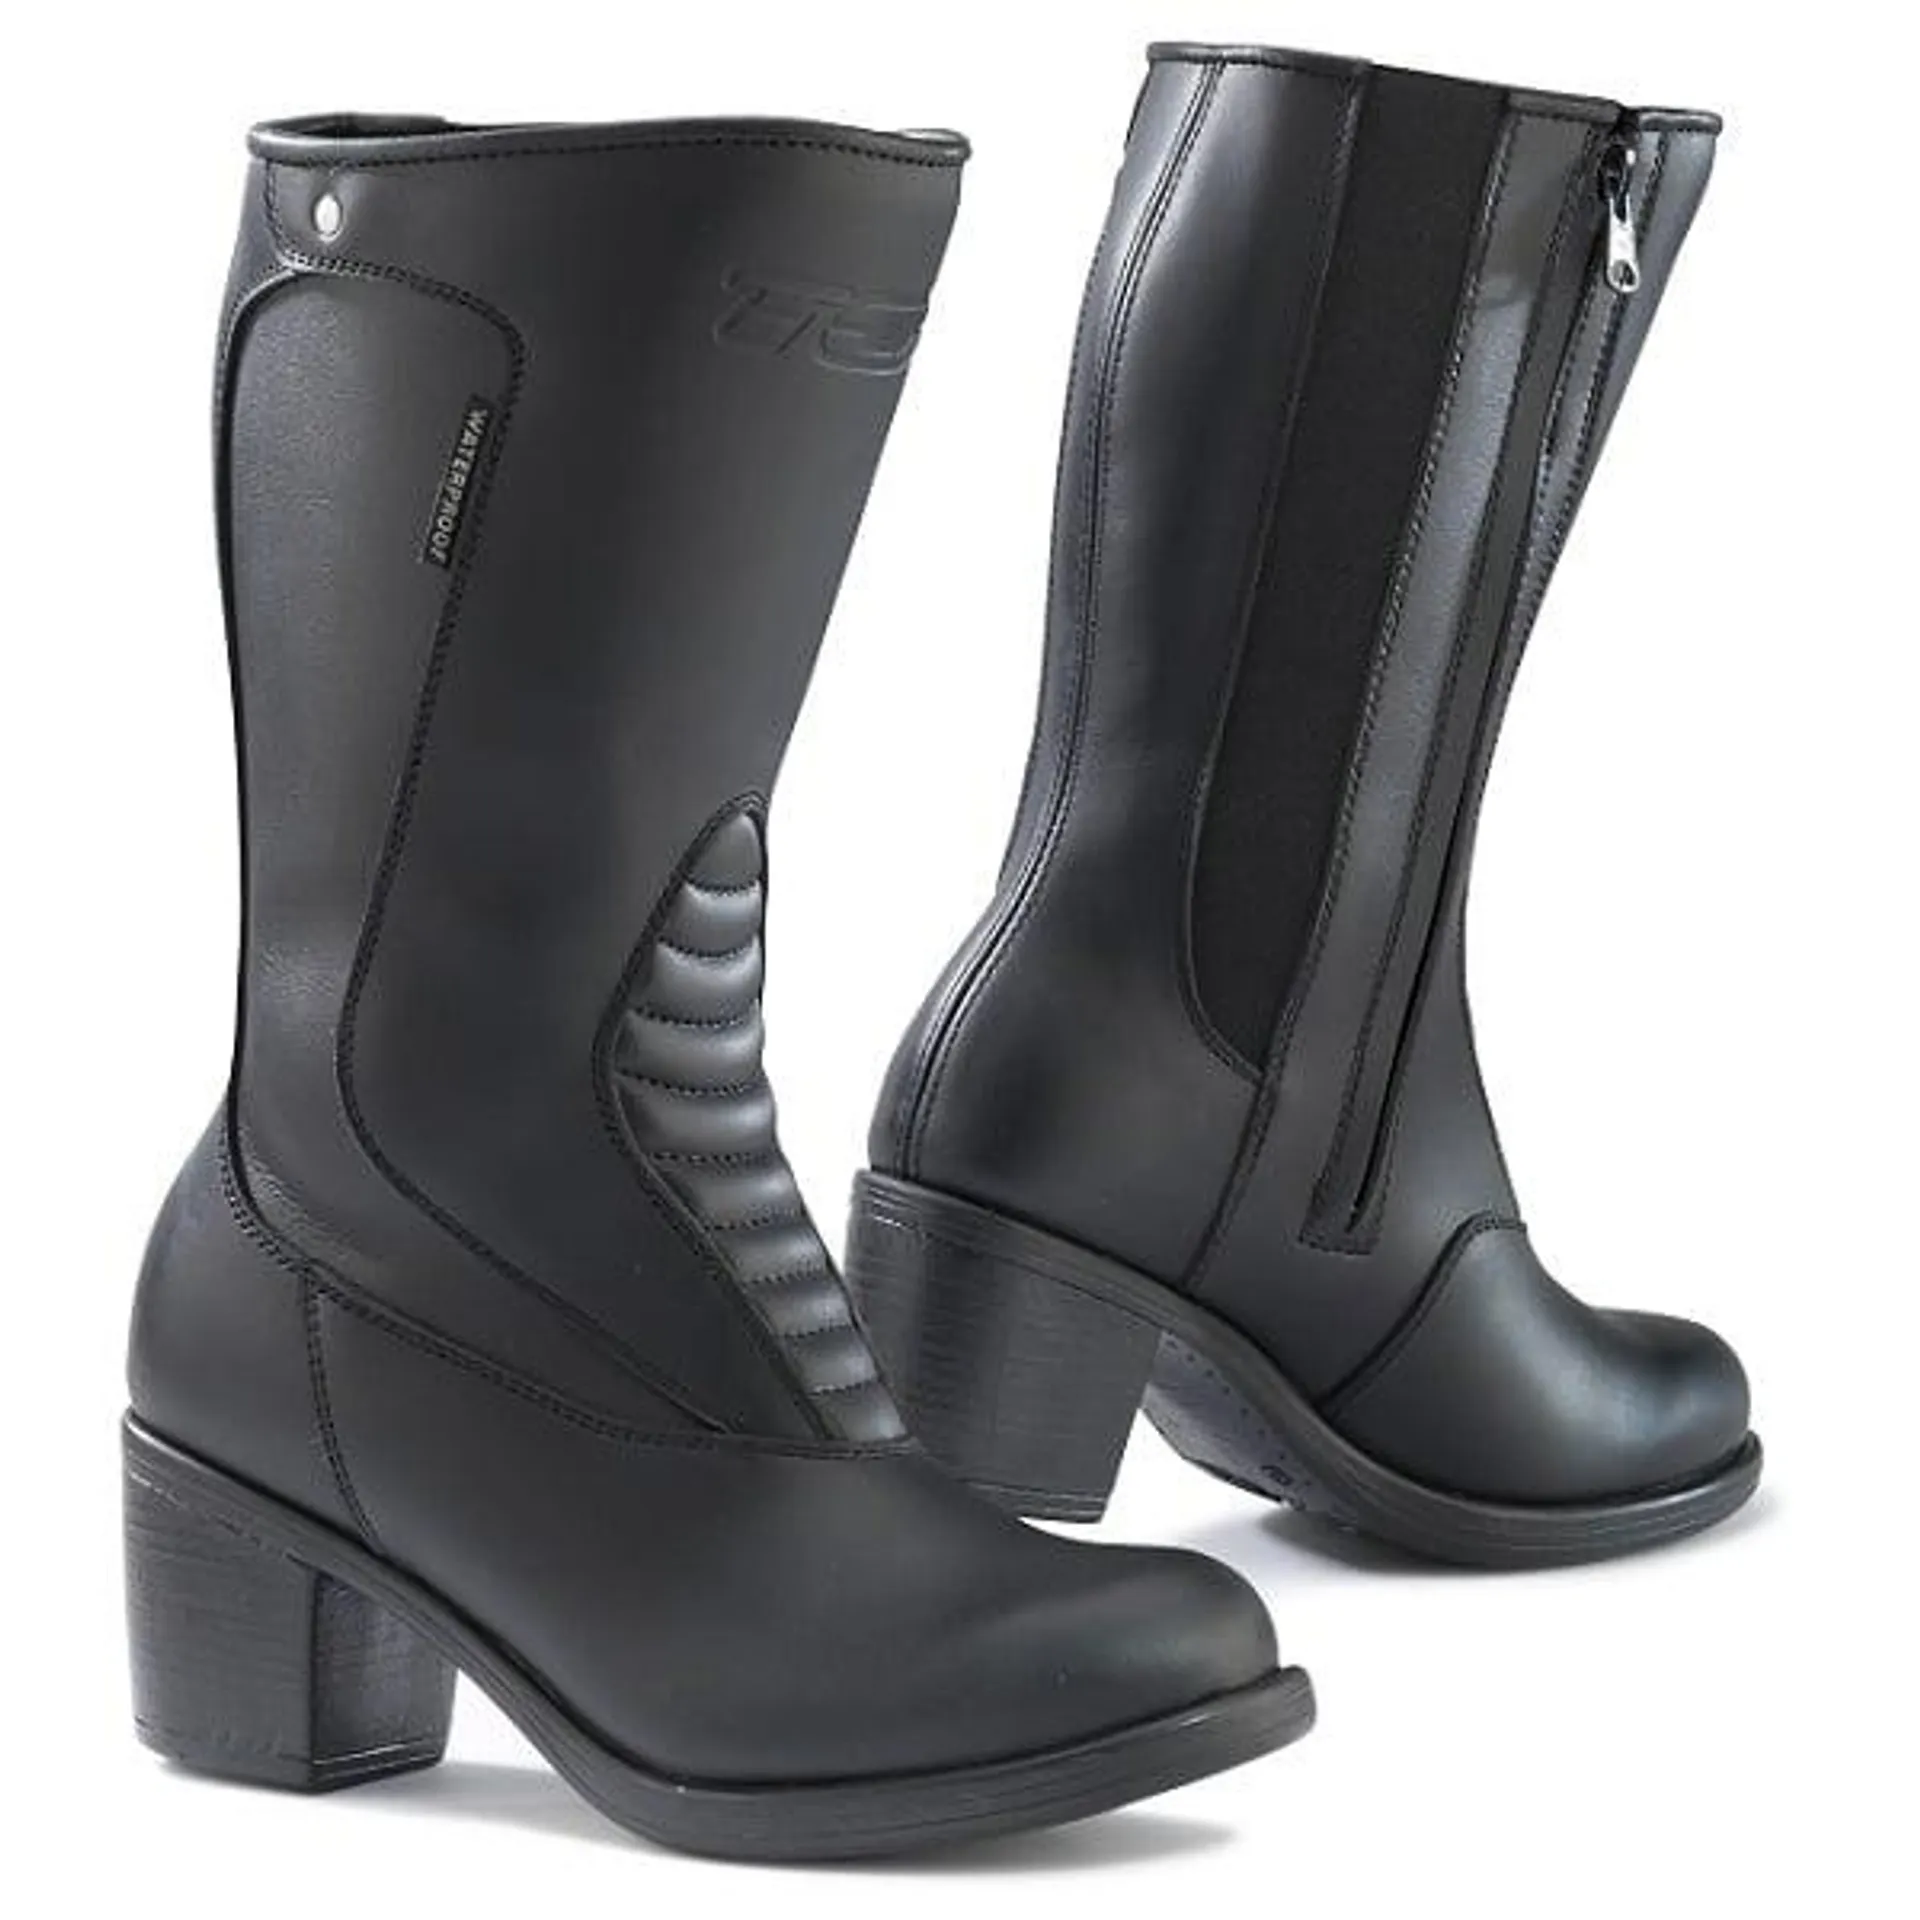 TCX Ladies Classic Waterproof Boots - Black